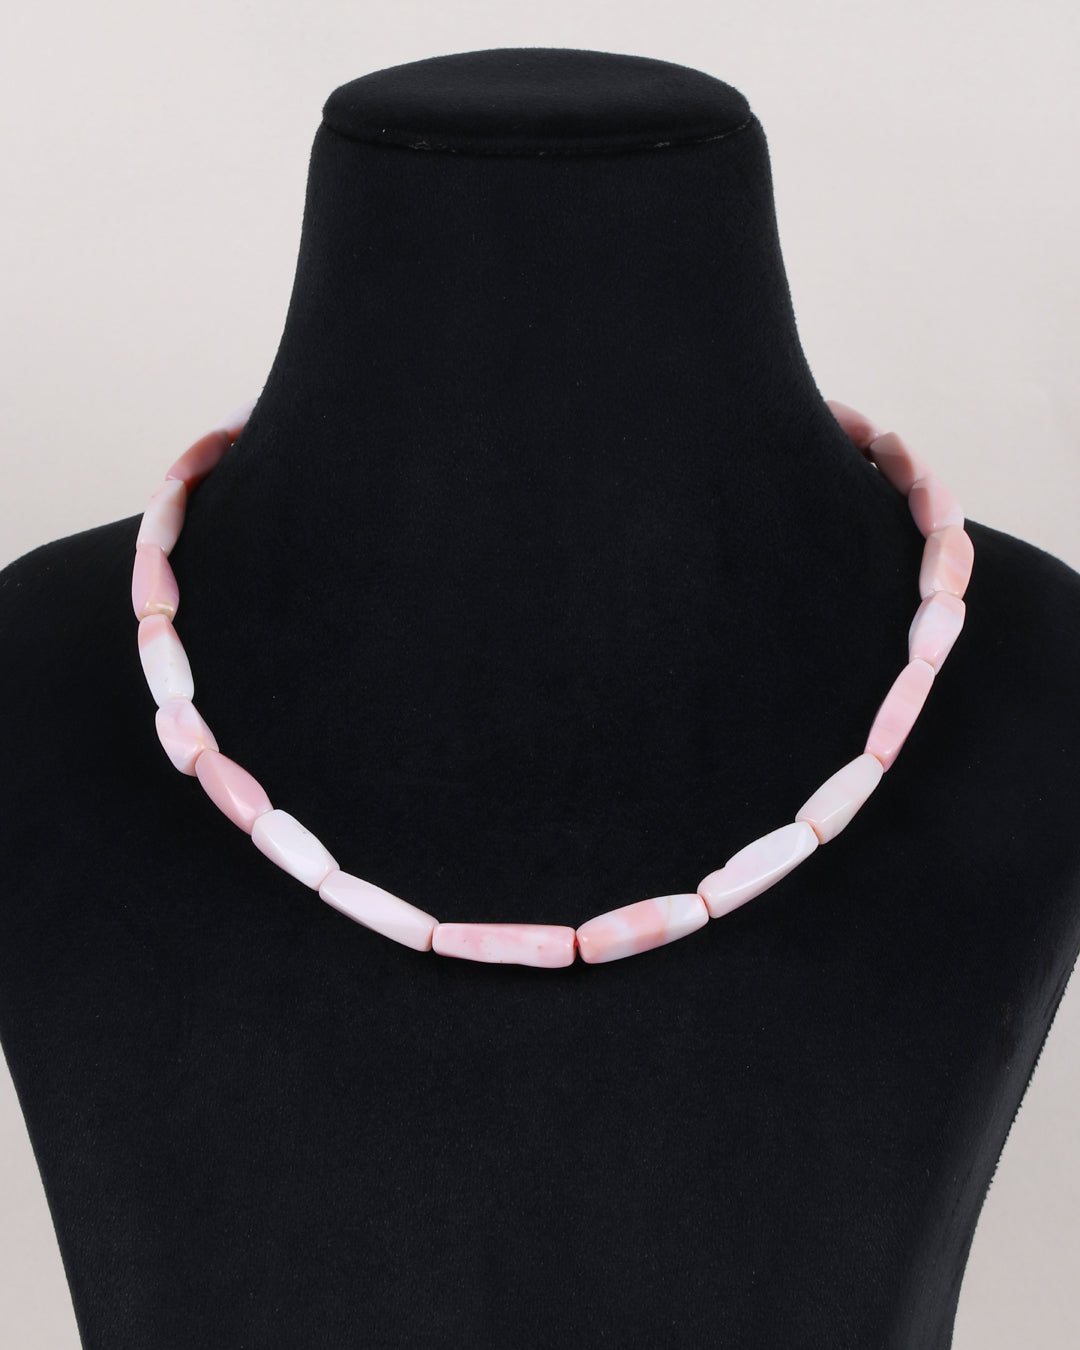 Pink Opal Gemstone Beads Necklace Jewelry